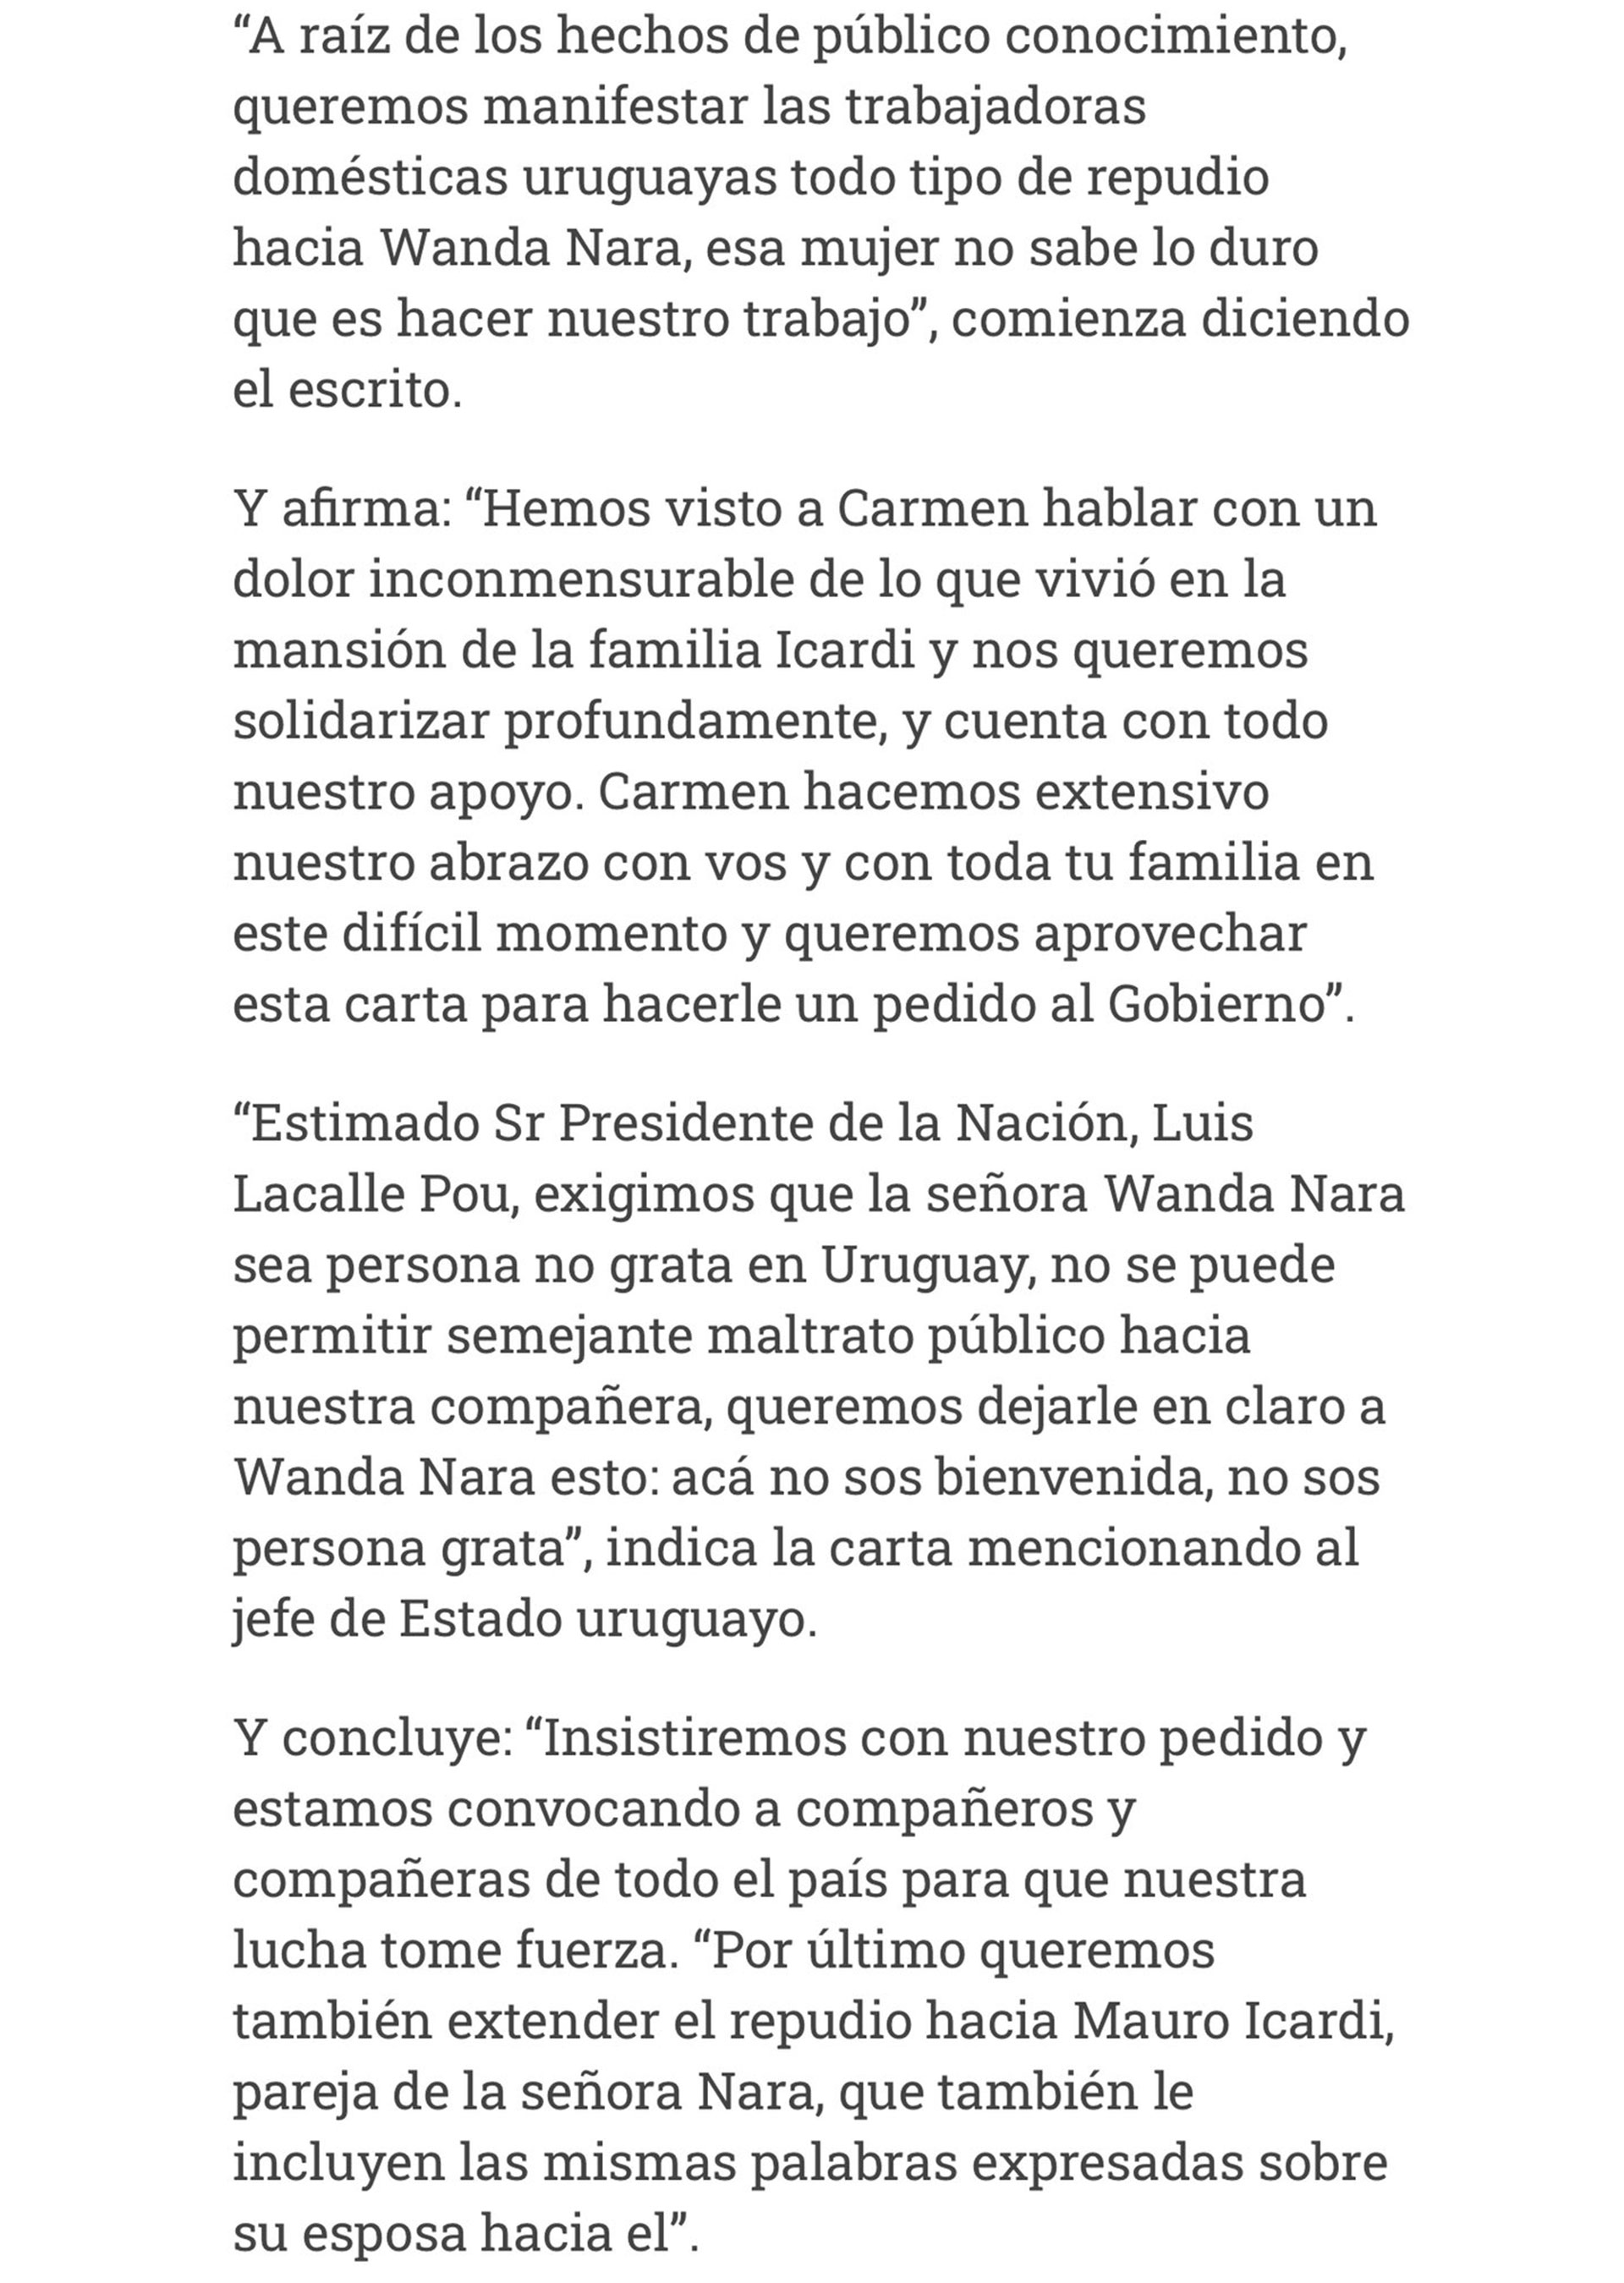 Las empleadas domésticas de Uruguay le solicitaron al Presidente Lacalle Pou declarar a Wanda Nara “persona no grata” 